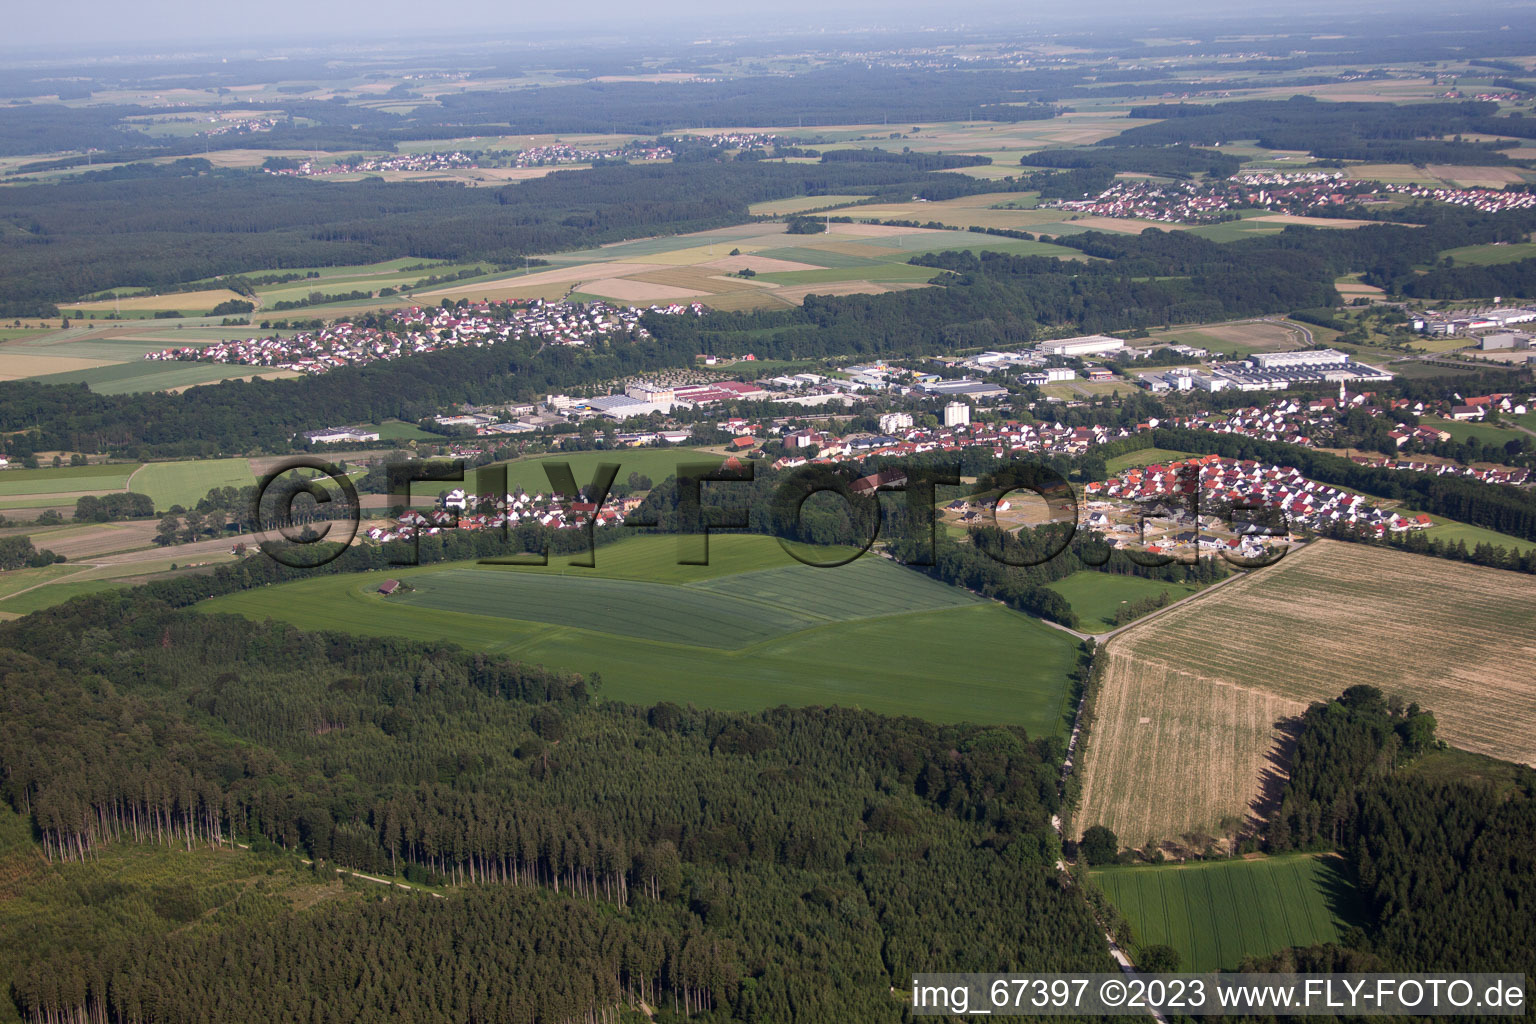 Aerial view of Biberach an der Riss in Biberach an der Riß in the state Baden-Wuerttemberg, Germany